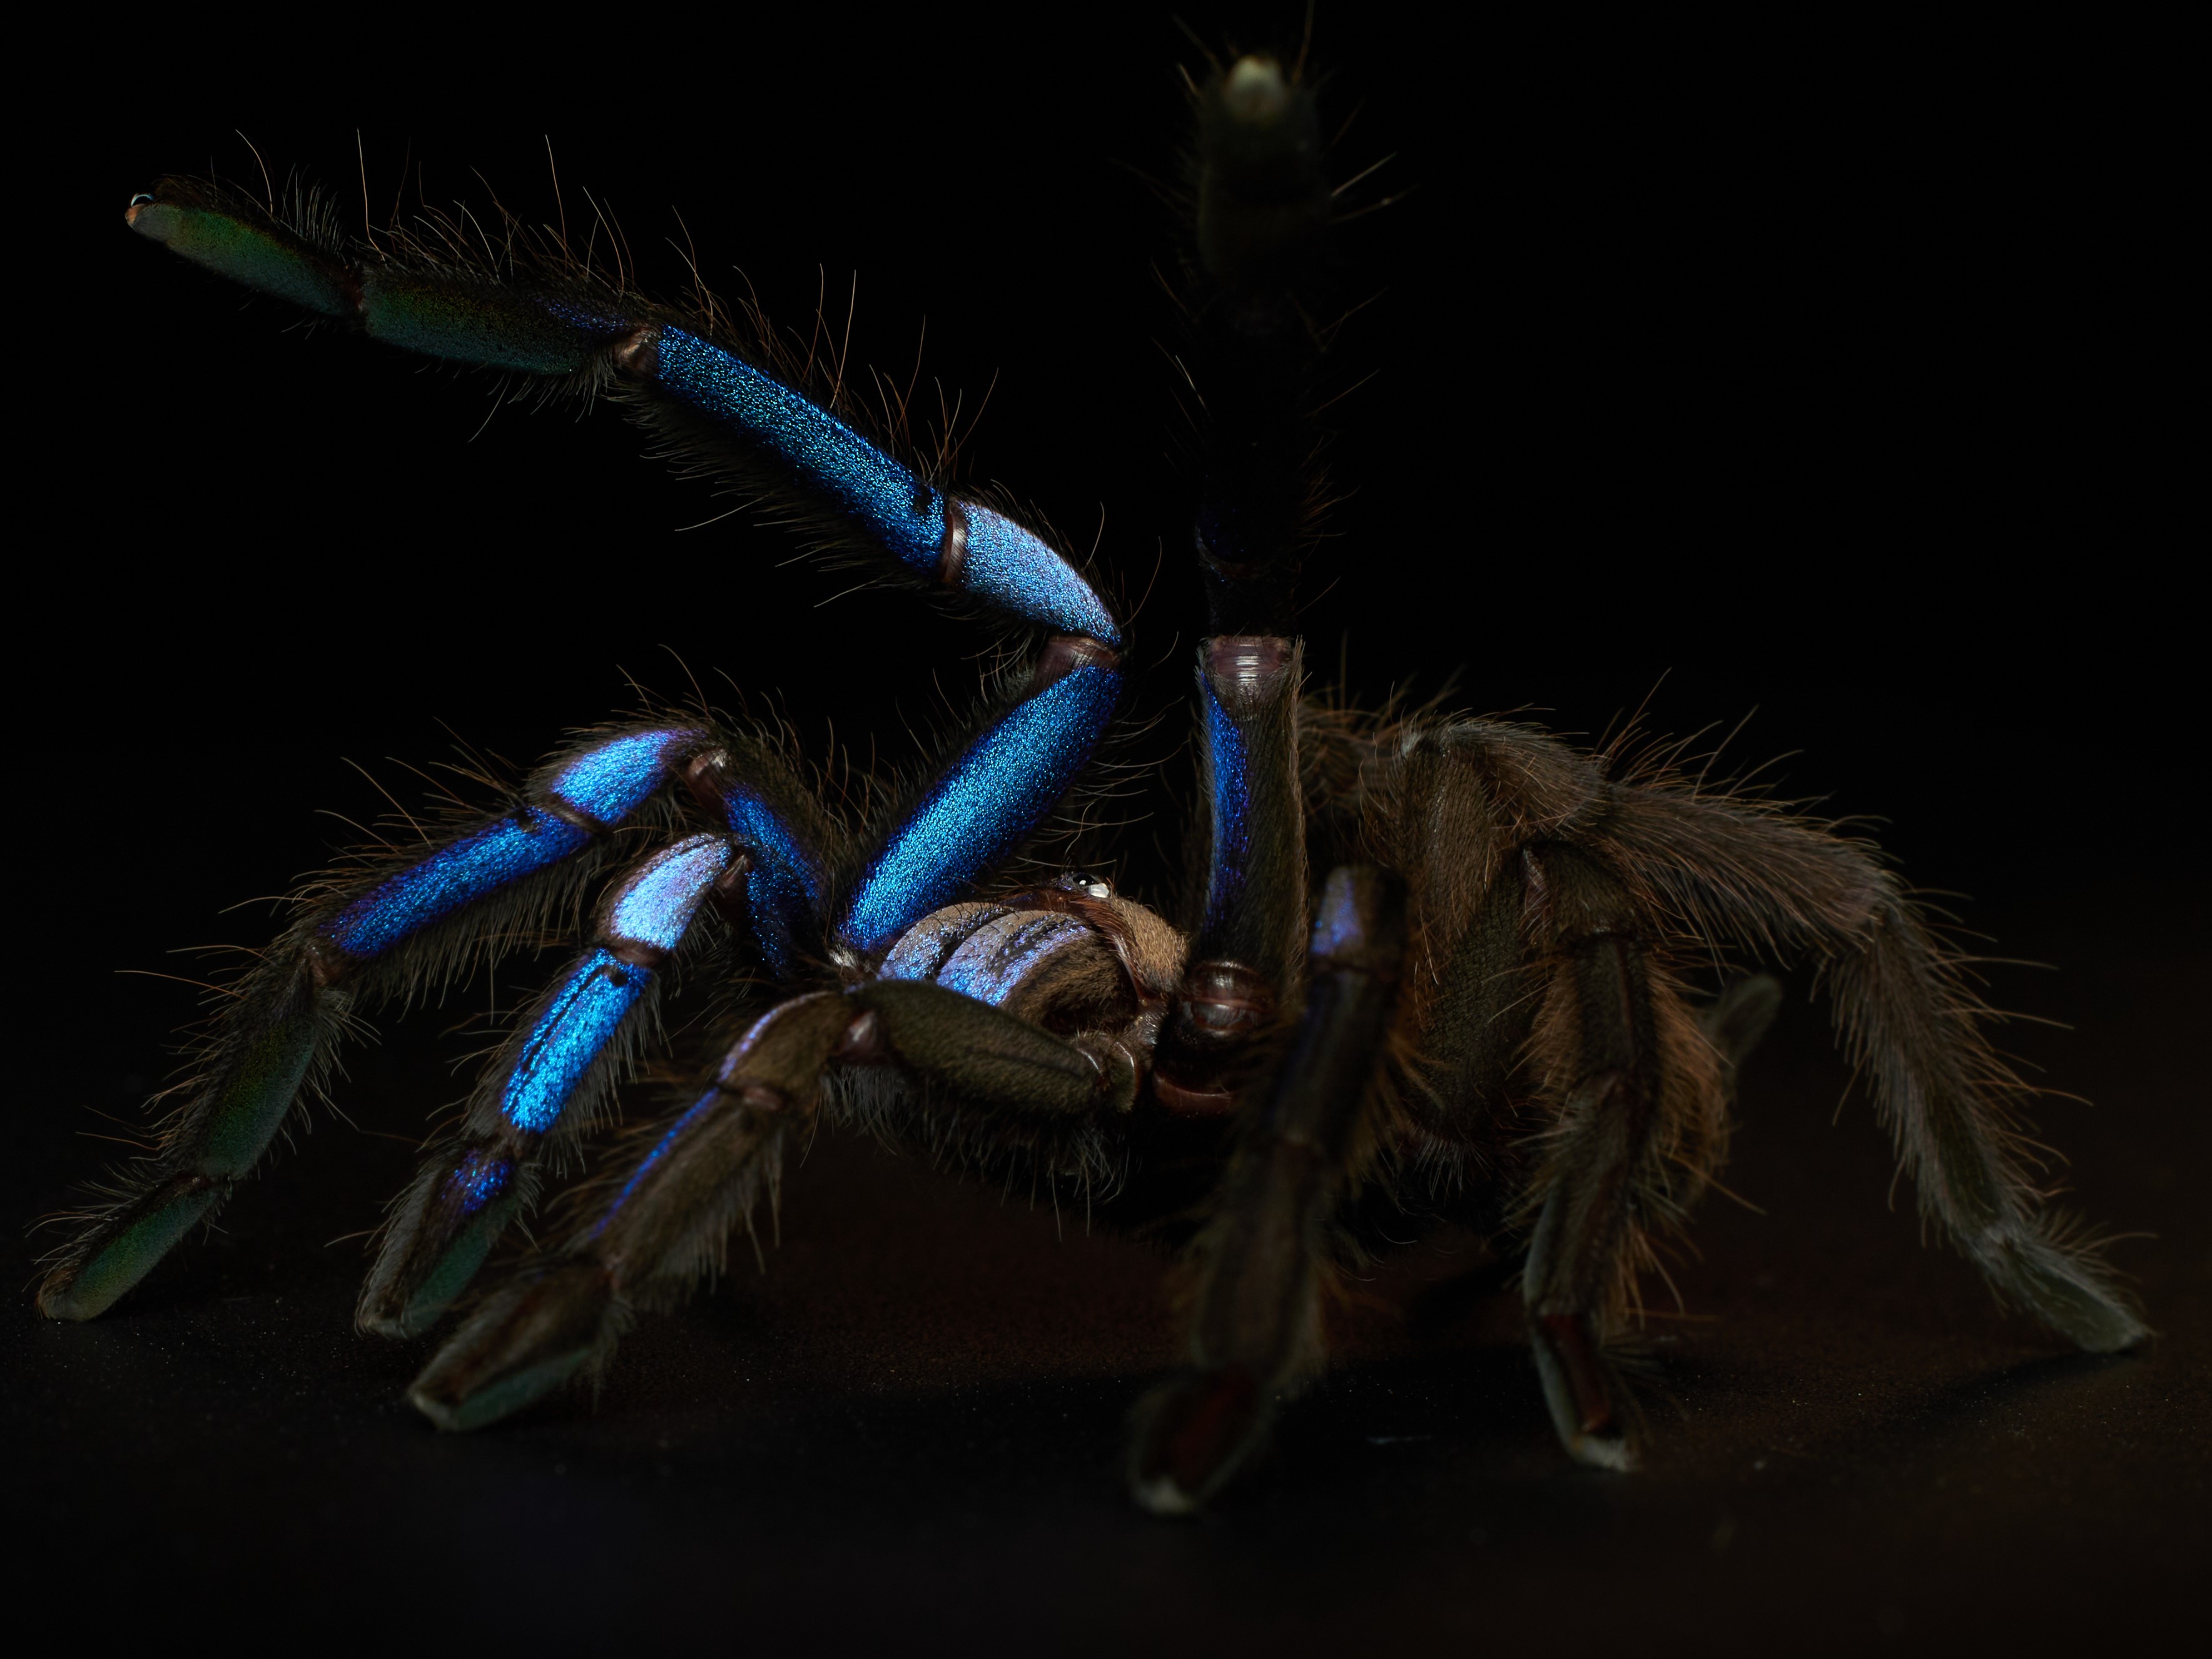 a black tarantula with bright blue legs